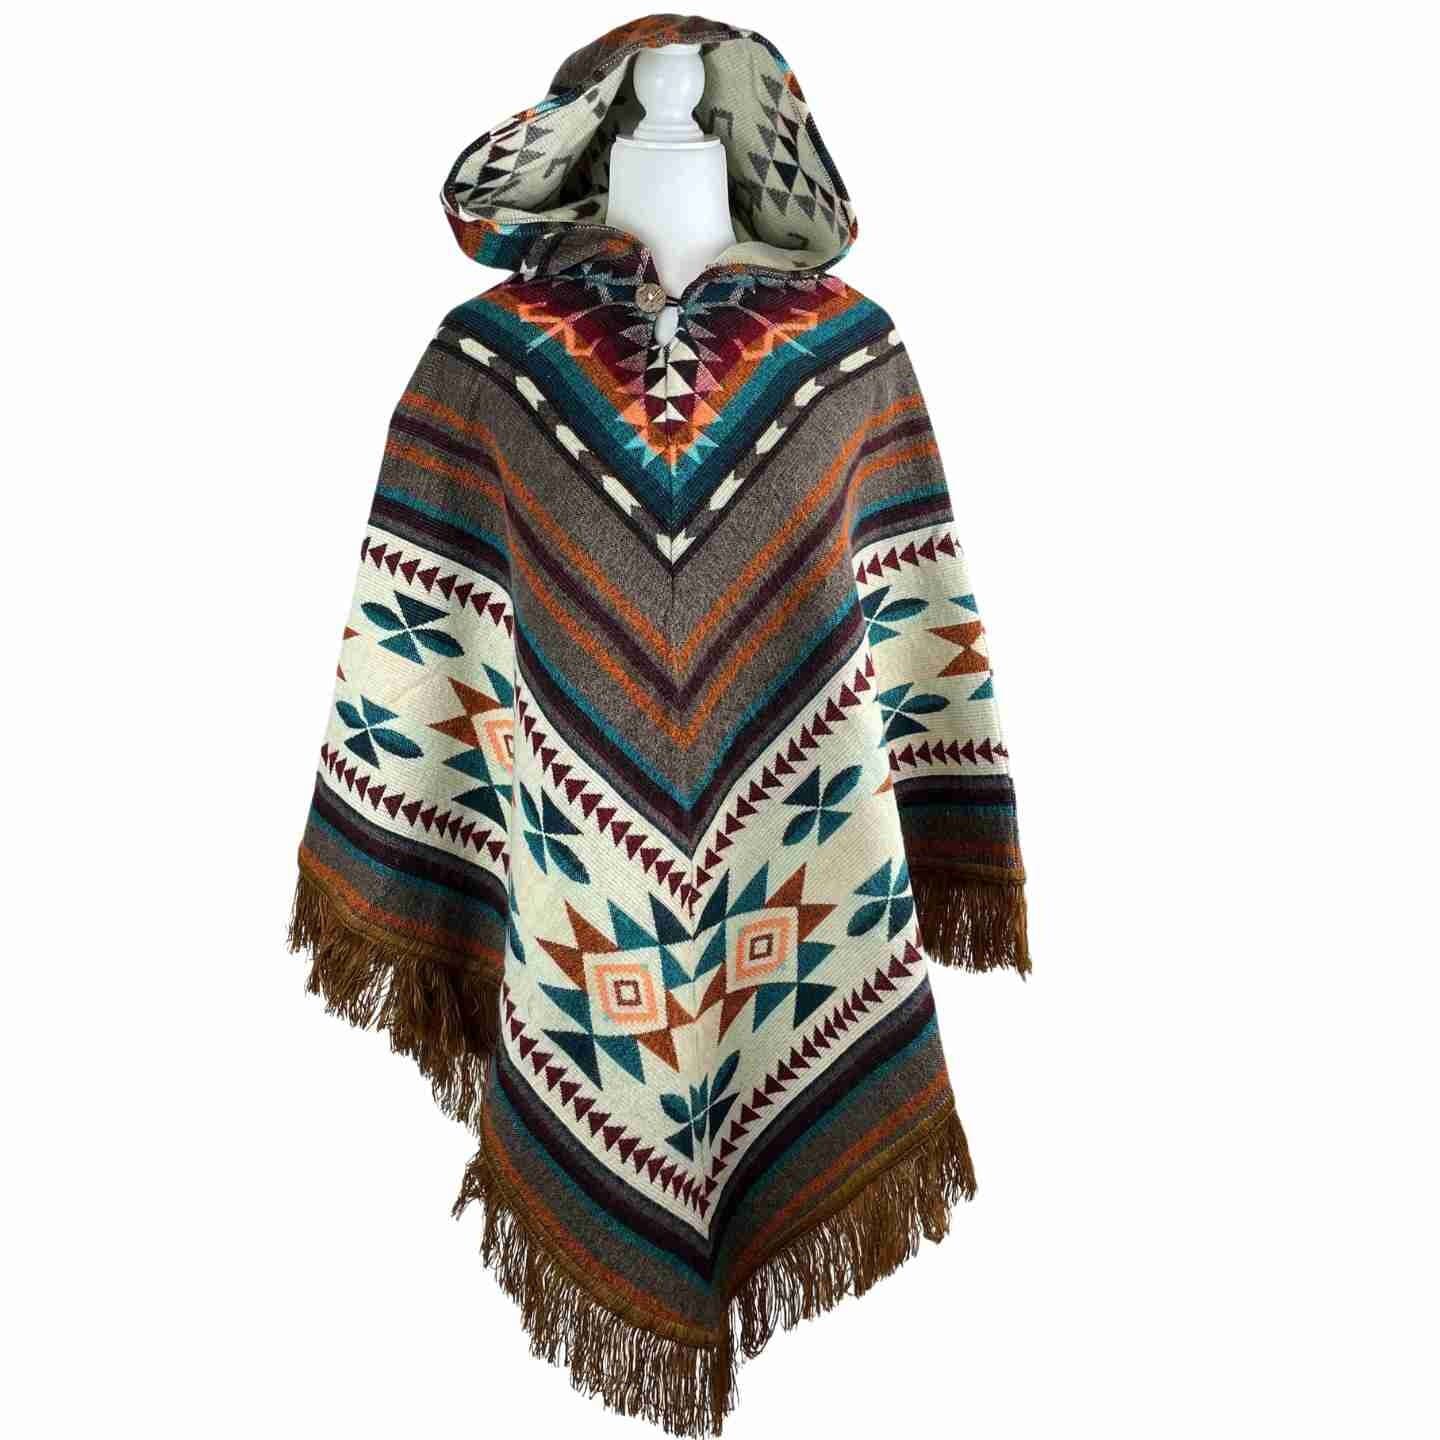 Warm Cozy Boho Alpaca Wool Hooded Poncho - Winter Soft Outerwear for Women, Gingerbread Beige V Style Cape with Tassels